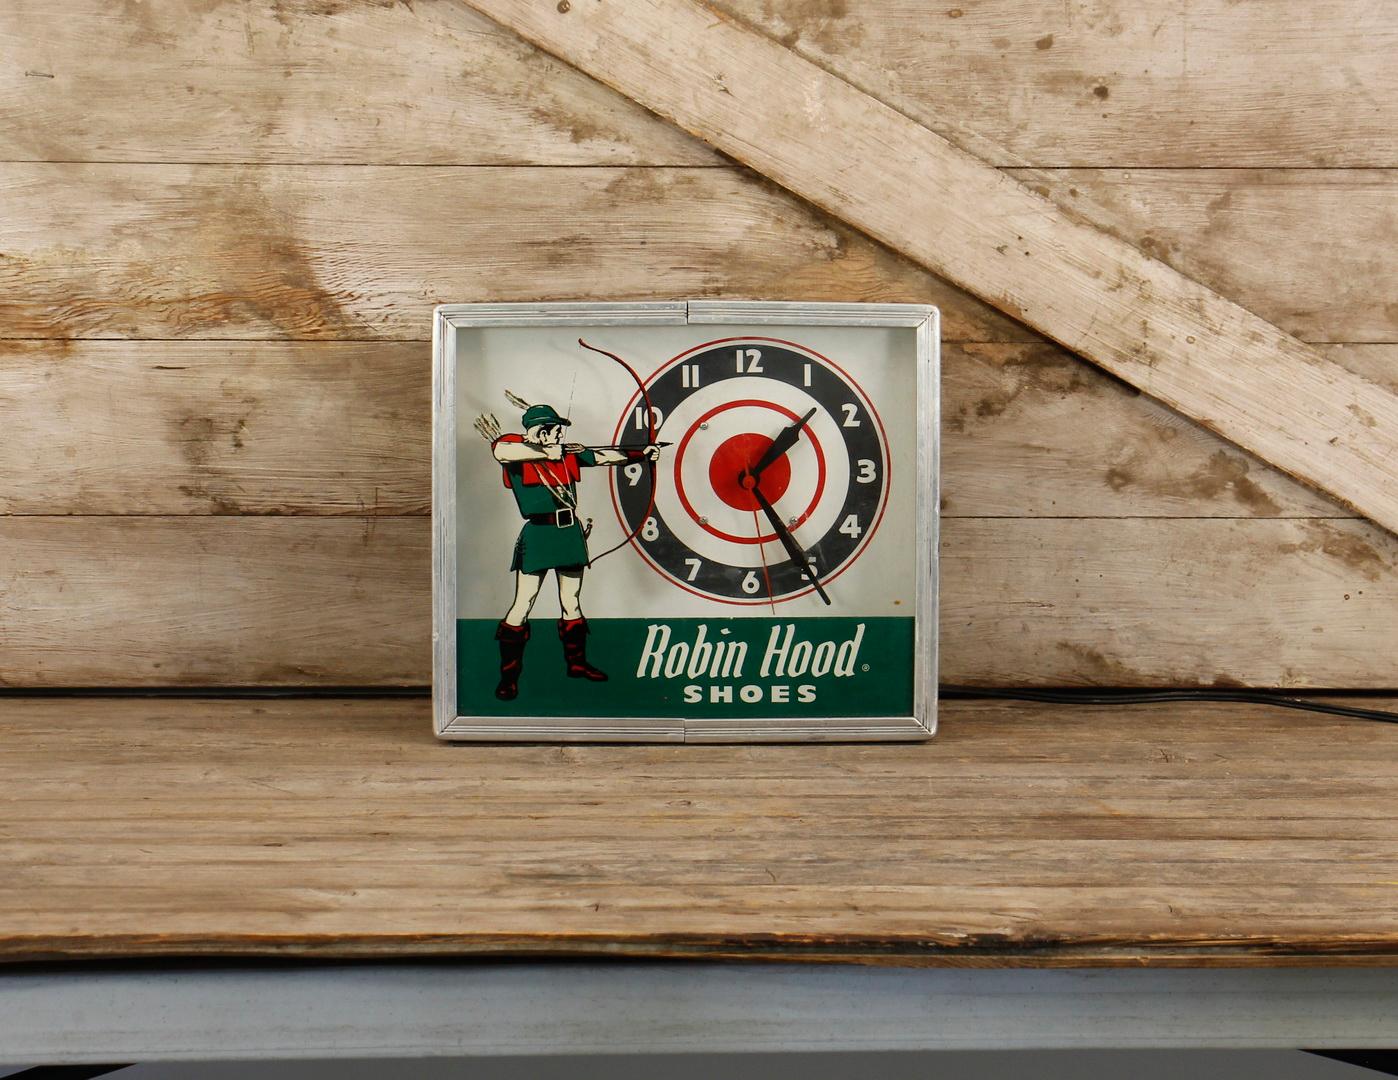 Robin Hood Shoes Advertising Clock